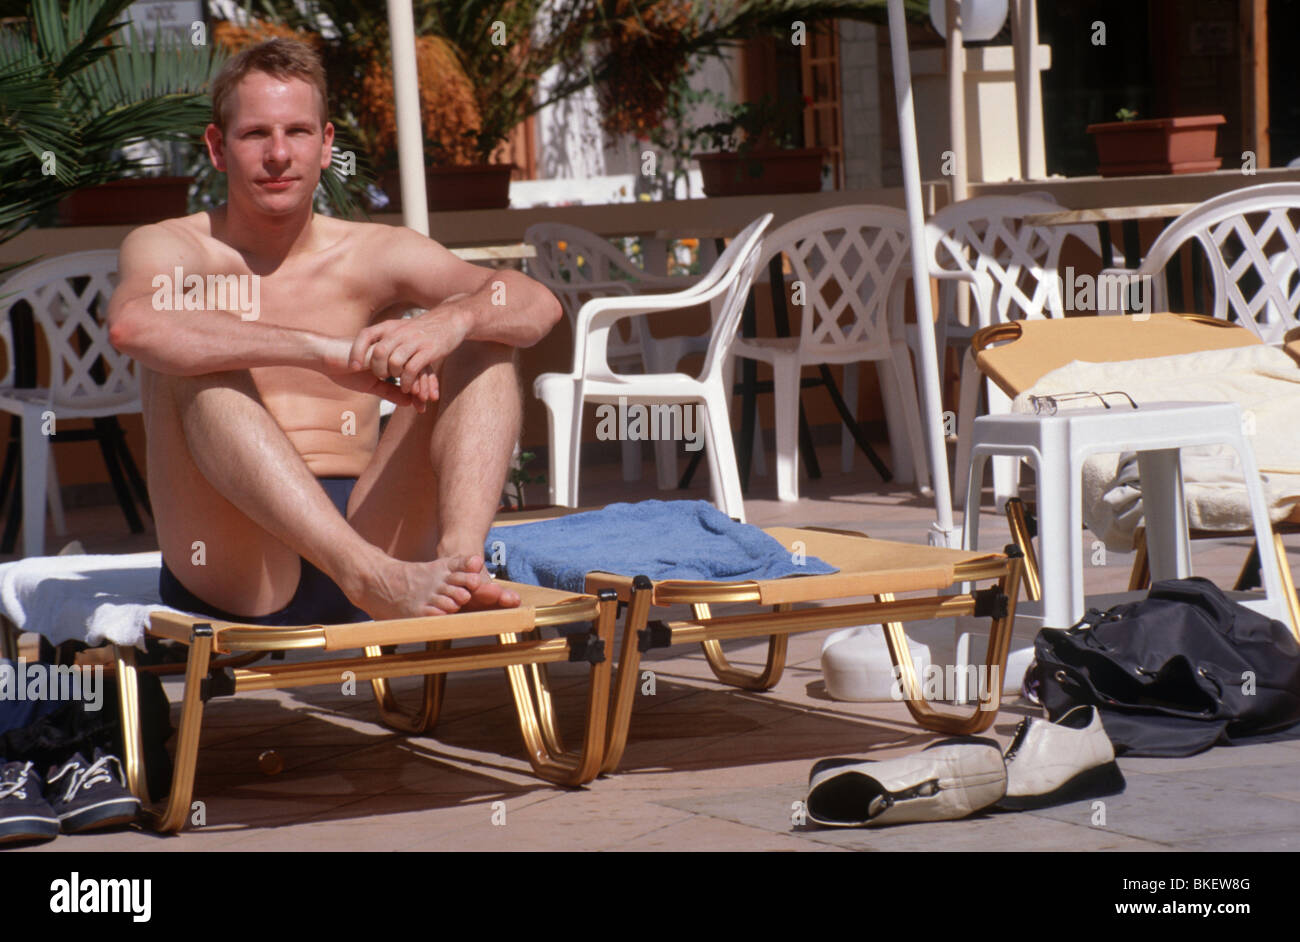 Man on holiday sitting on sunbed Stock Photo